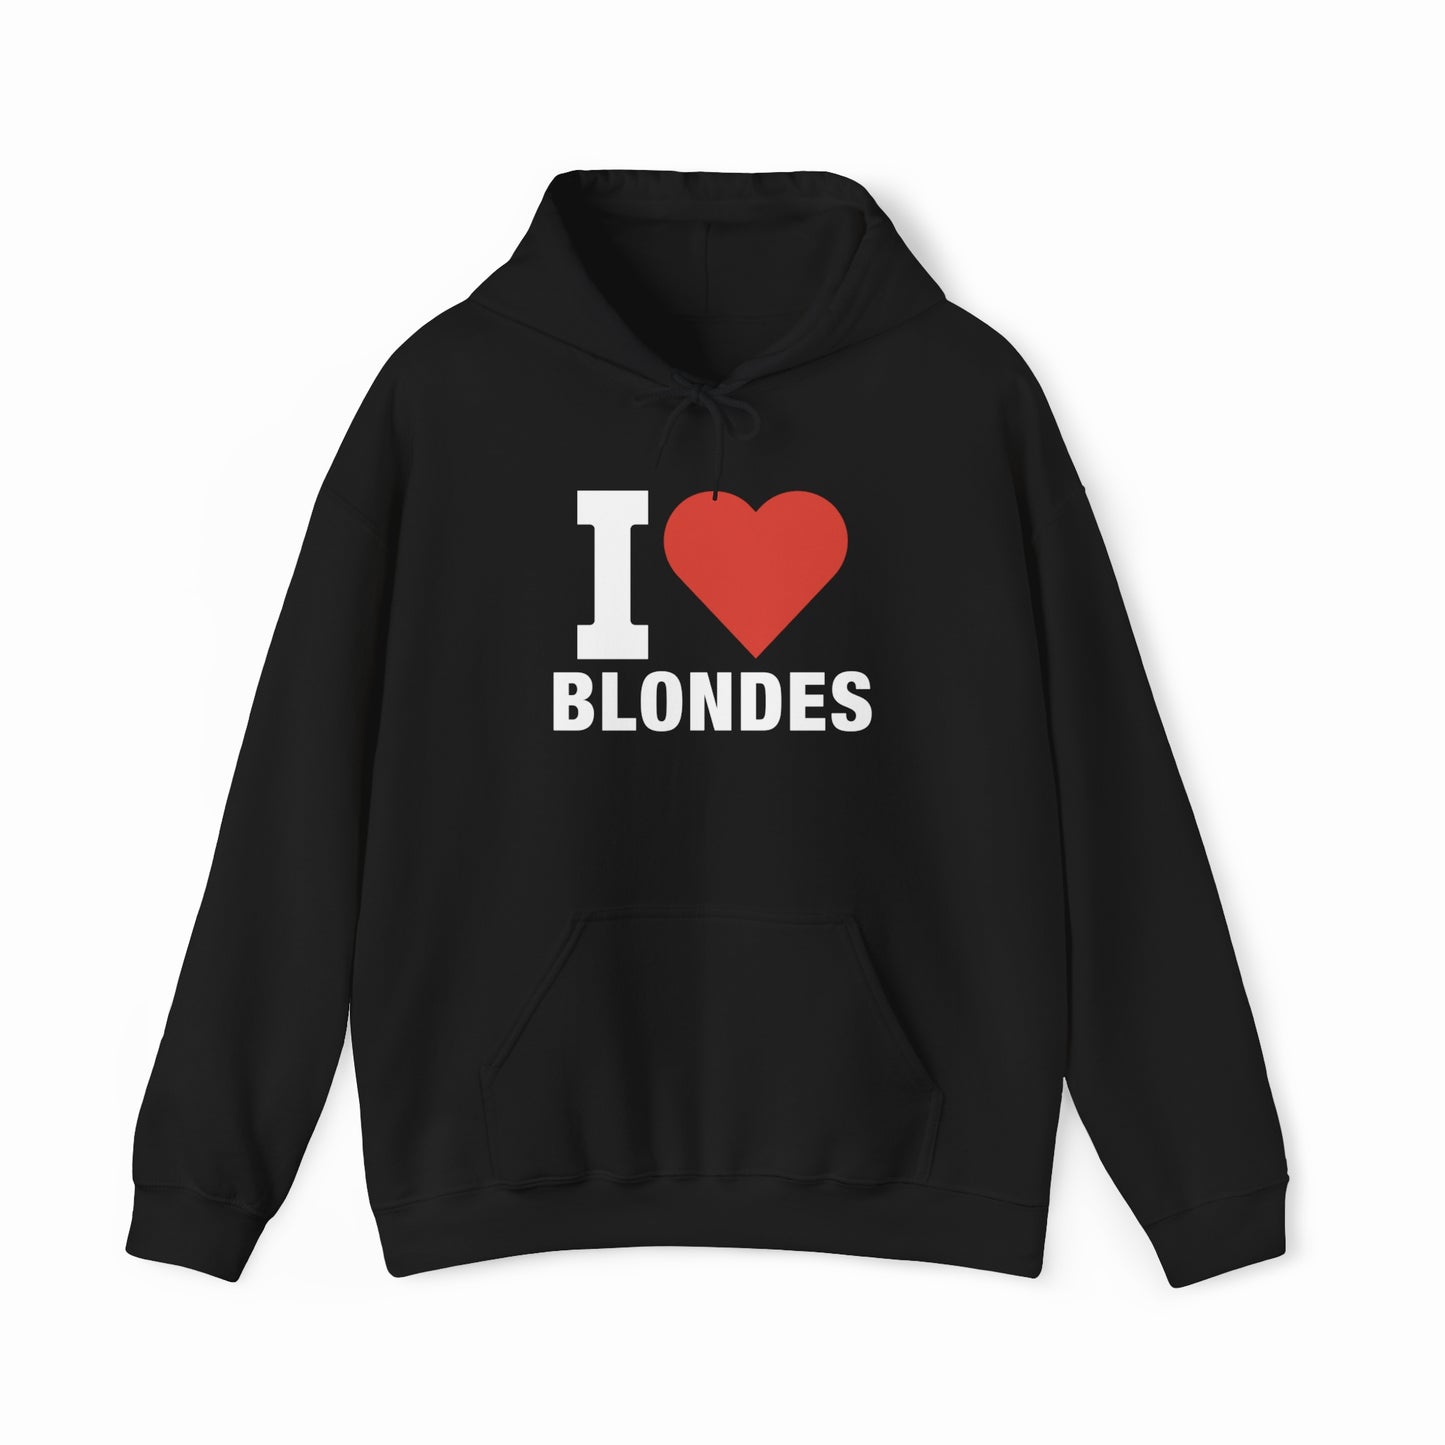 I Heart Blondes Hoodie